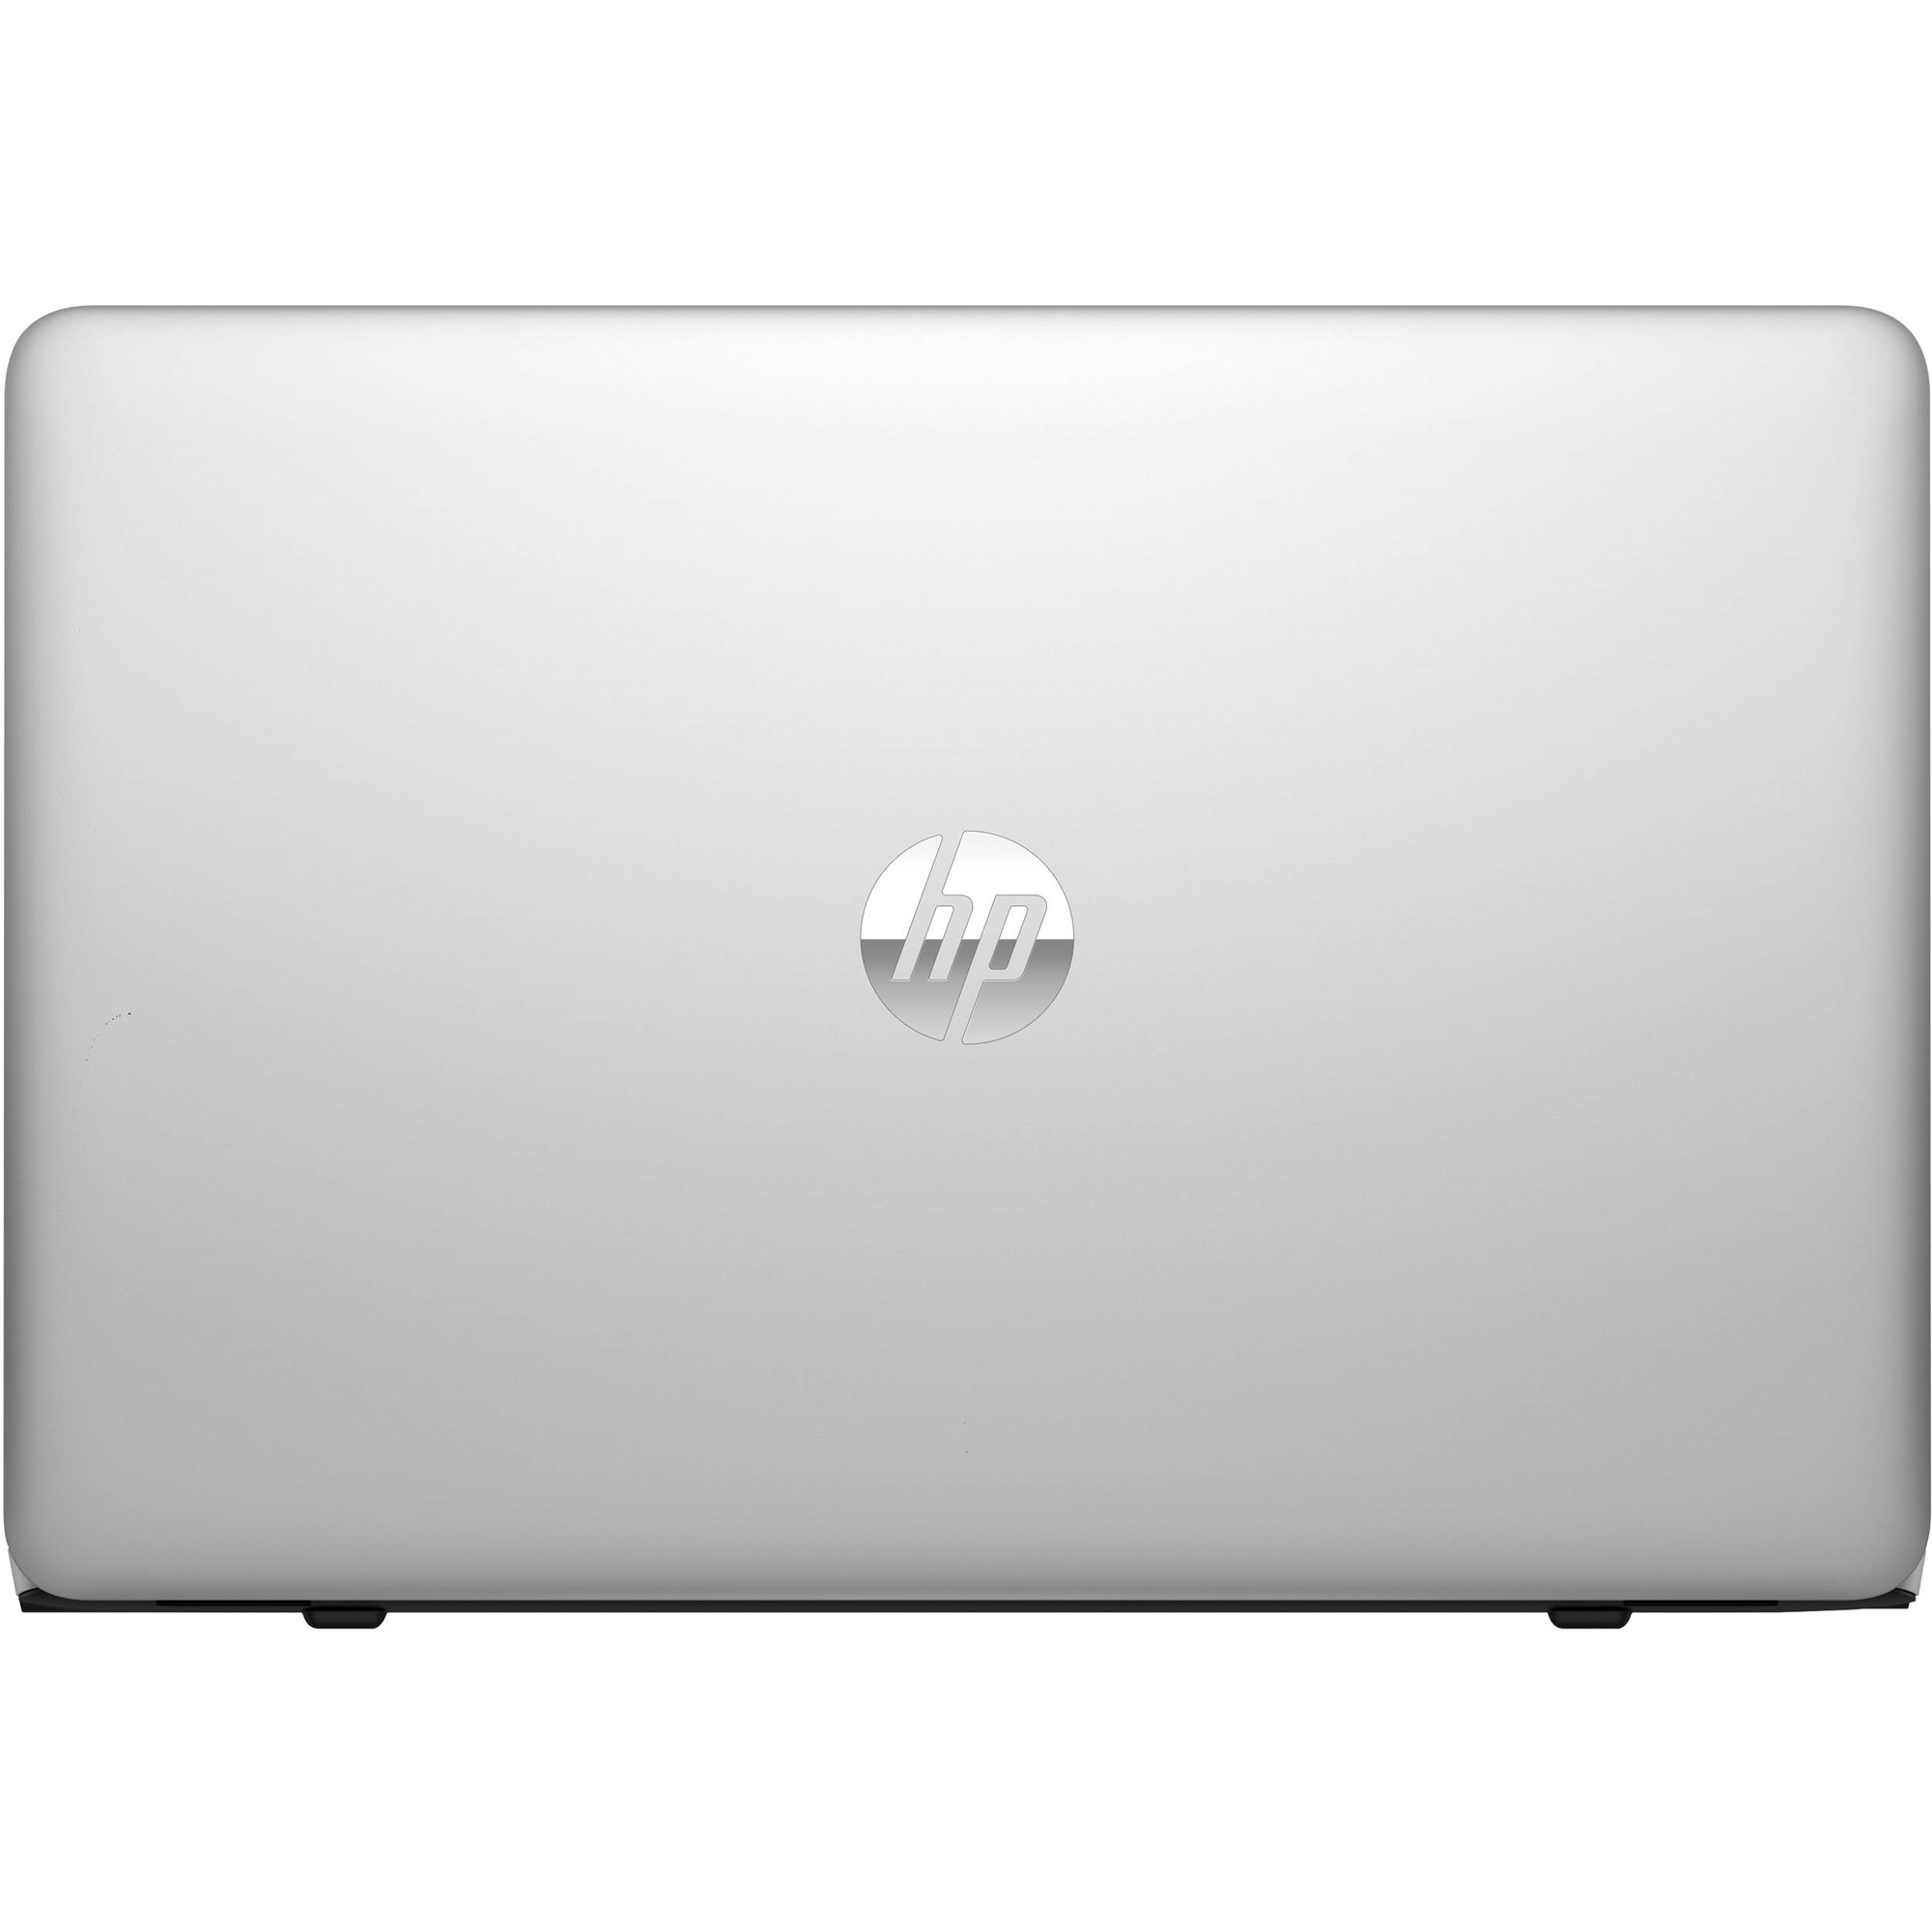 HP EliteBook 850 G4 Notebook PC (ENERGY STAR) (1BS52UT) 15.6in 256GB/8GB/8GB 2.7GHz Windows 10 Pro 64 Intel HD Graphics 620 - image 4 of 4